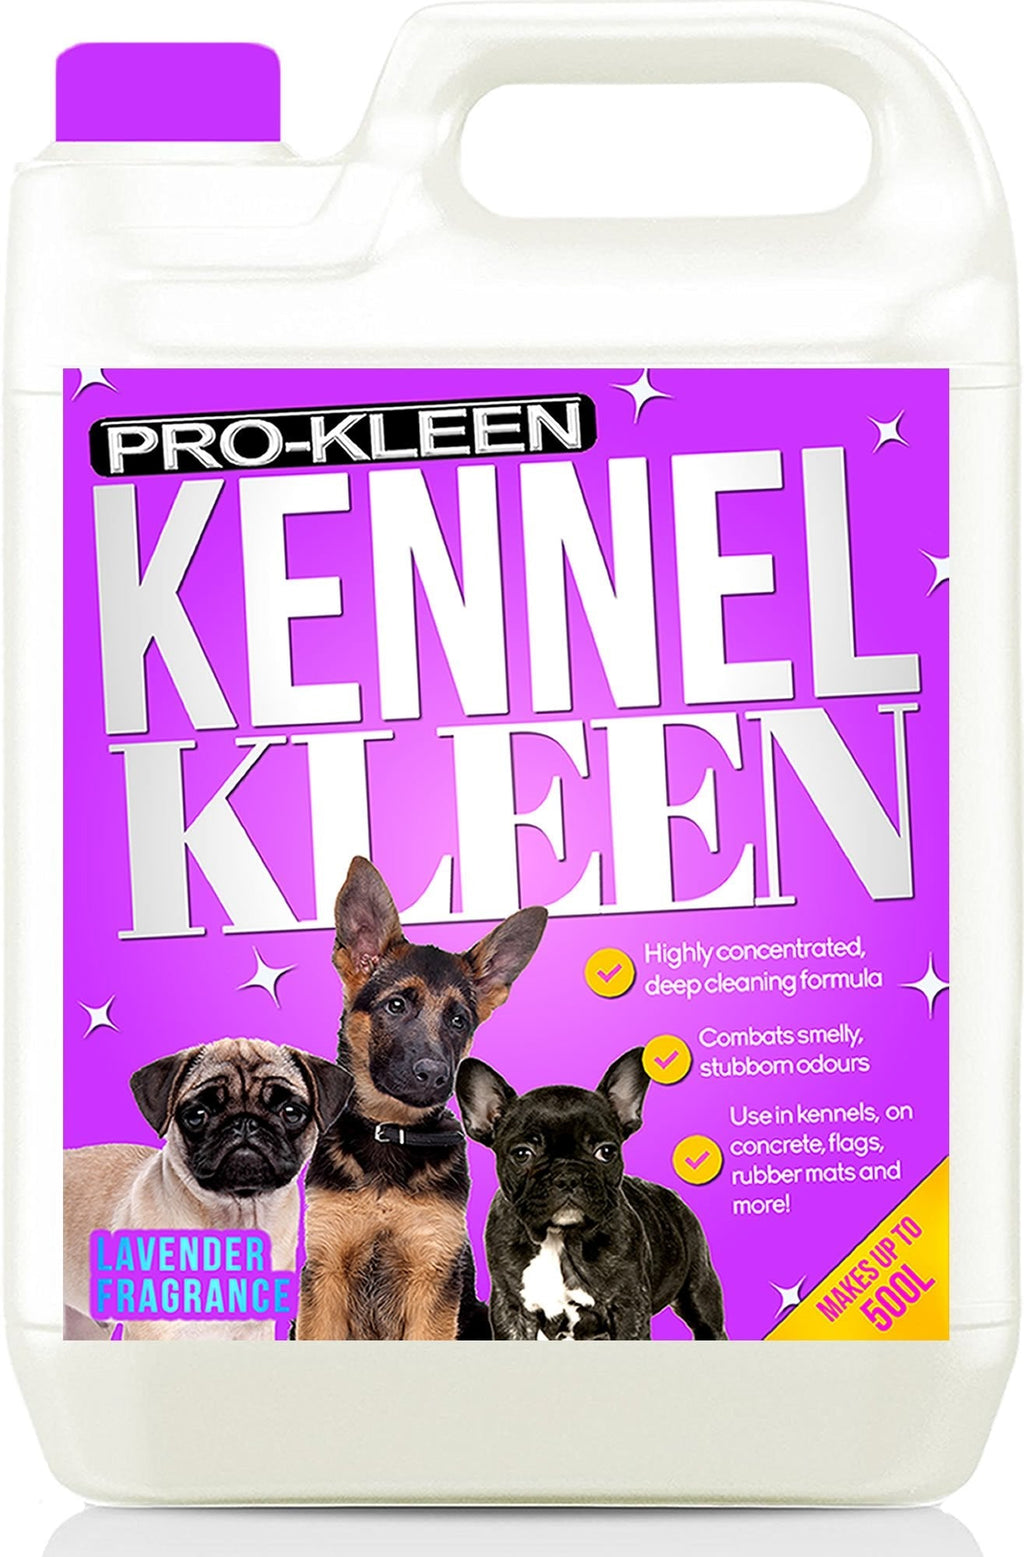 Pro-Kleen Kennel Disinfectant, Cleaner & Deodoriser (Lavender Fragrance) - 5L Pack - Tested according to DVG (German Veterinary Medical Society) - PawsPlanet Australia